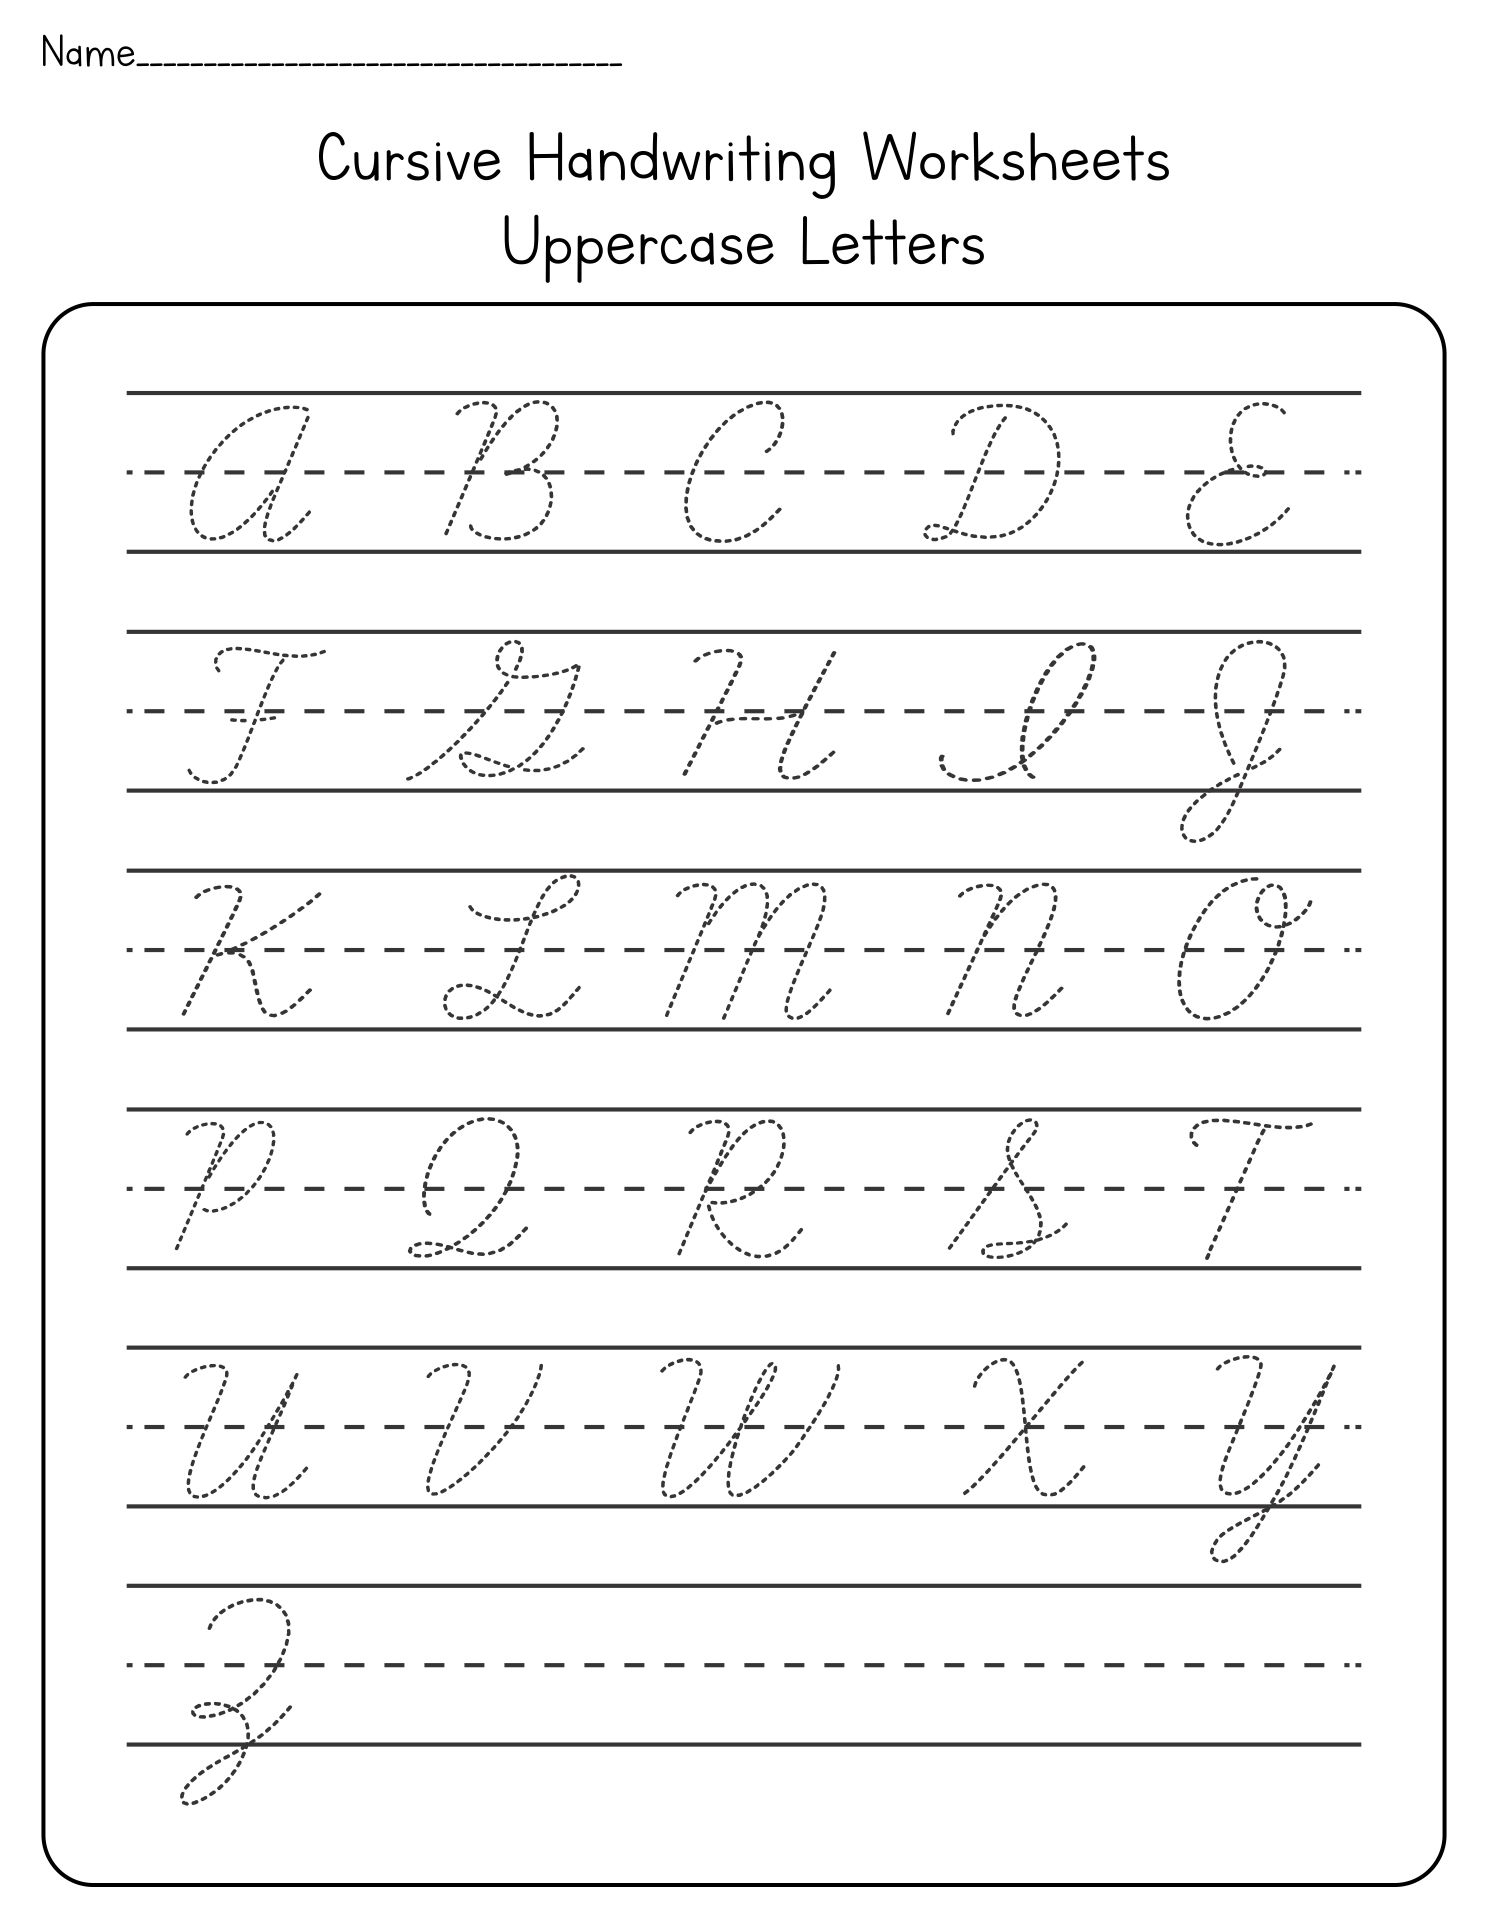 Cursive Handwriting Worksheets Blank | AlphabetWorksheetsFree.com